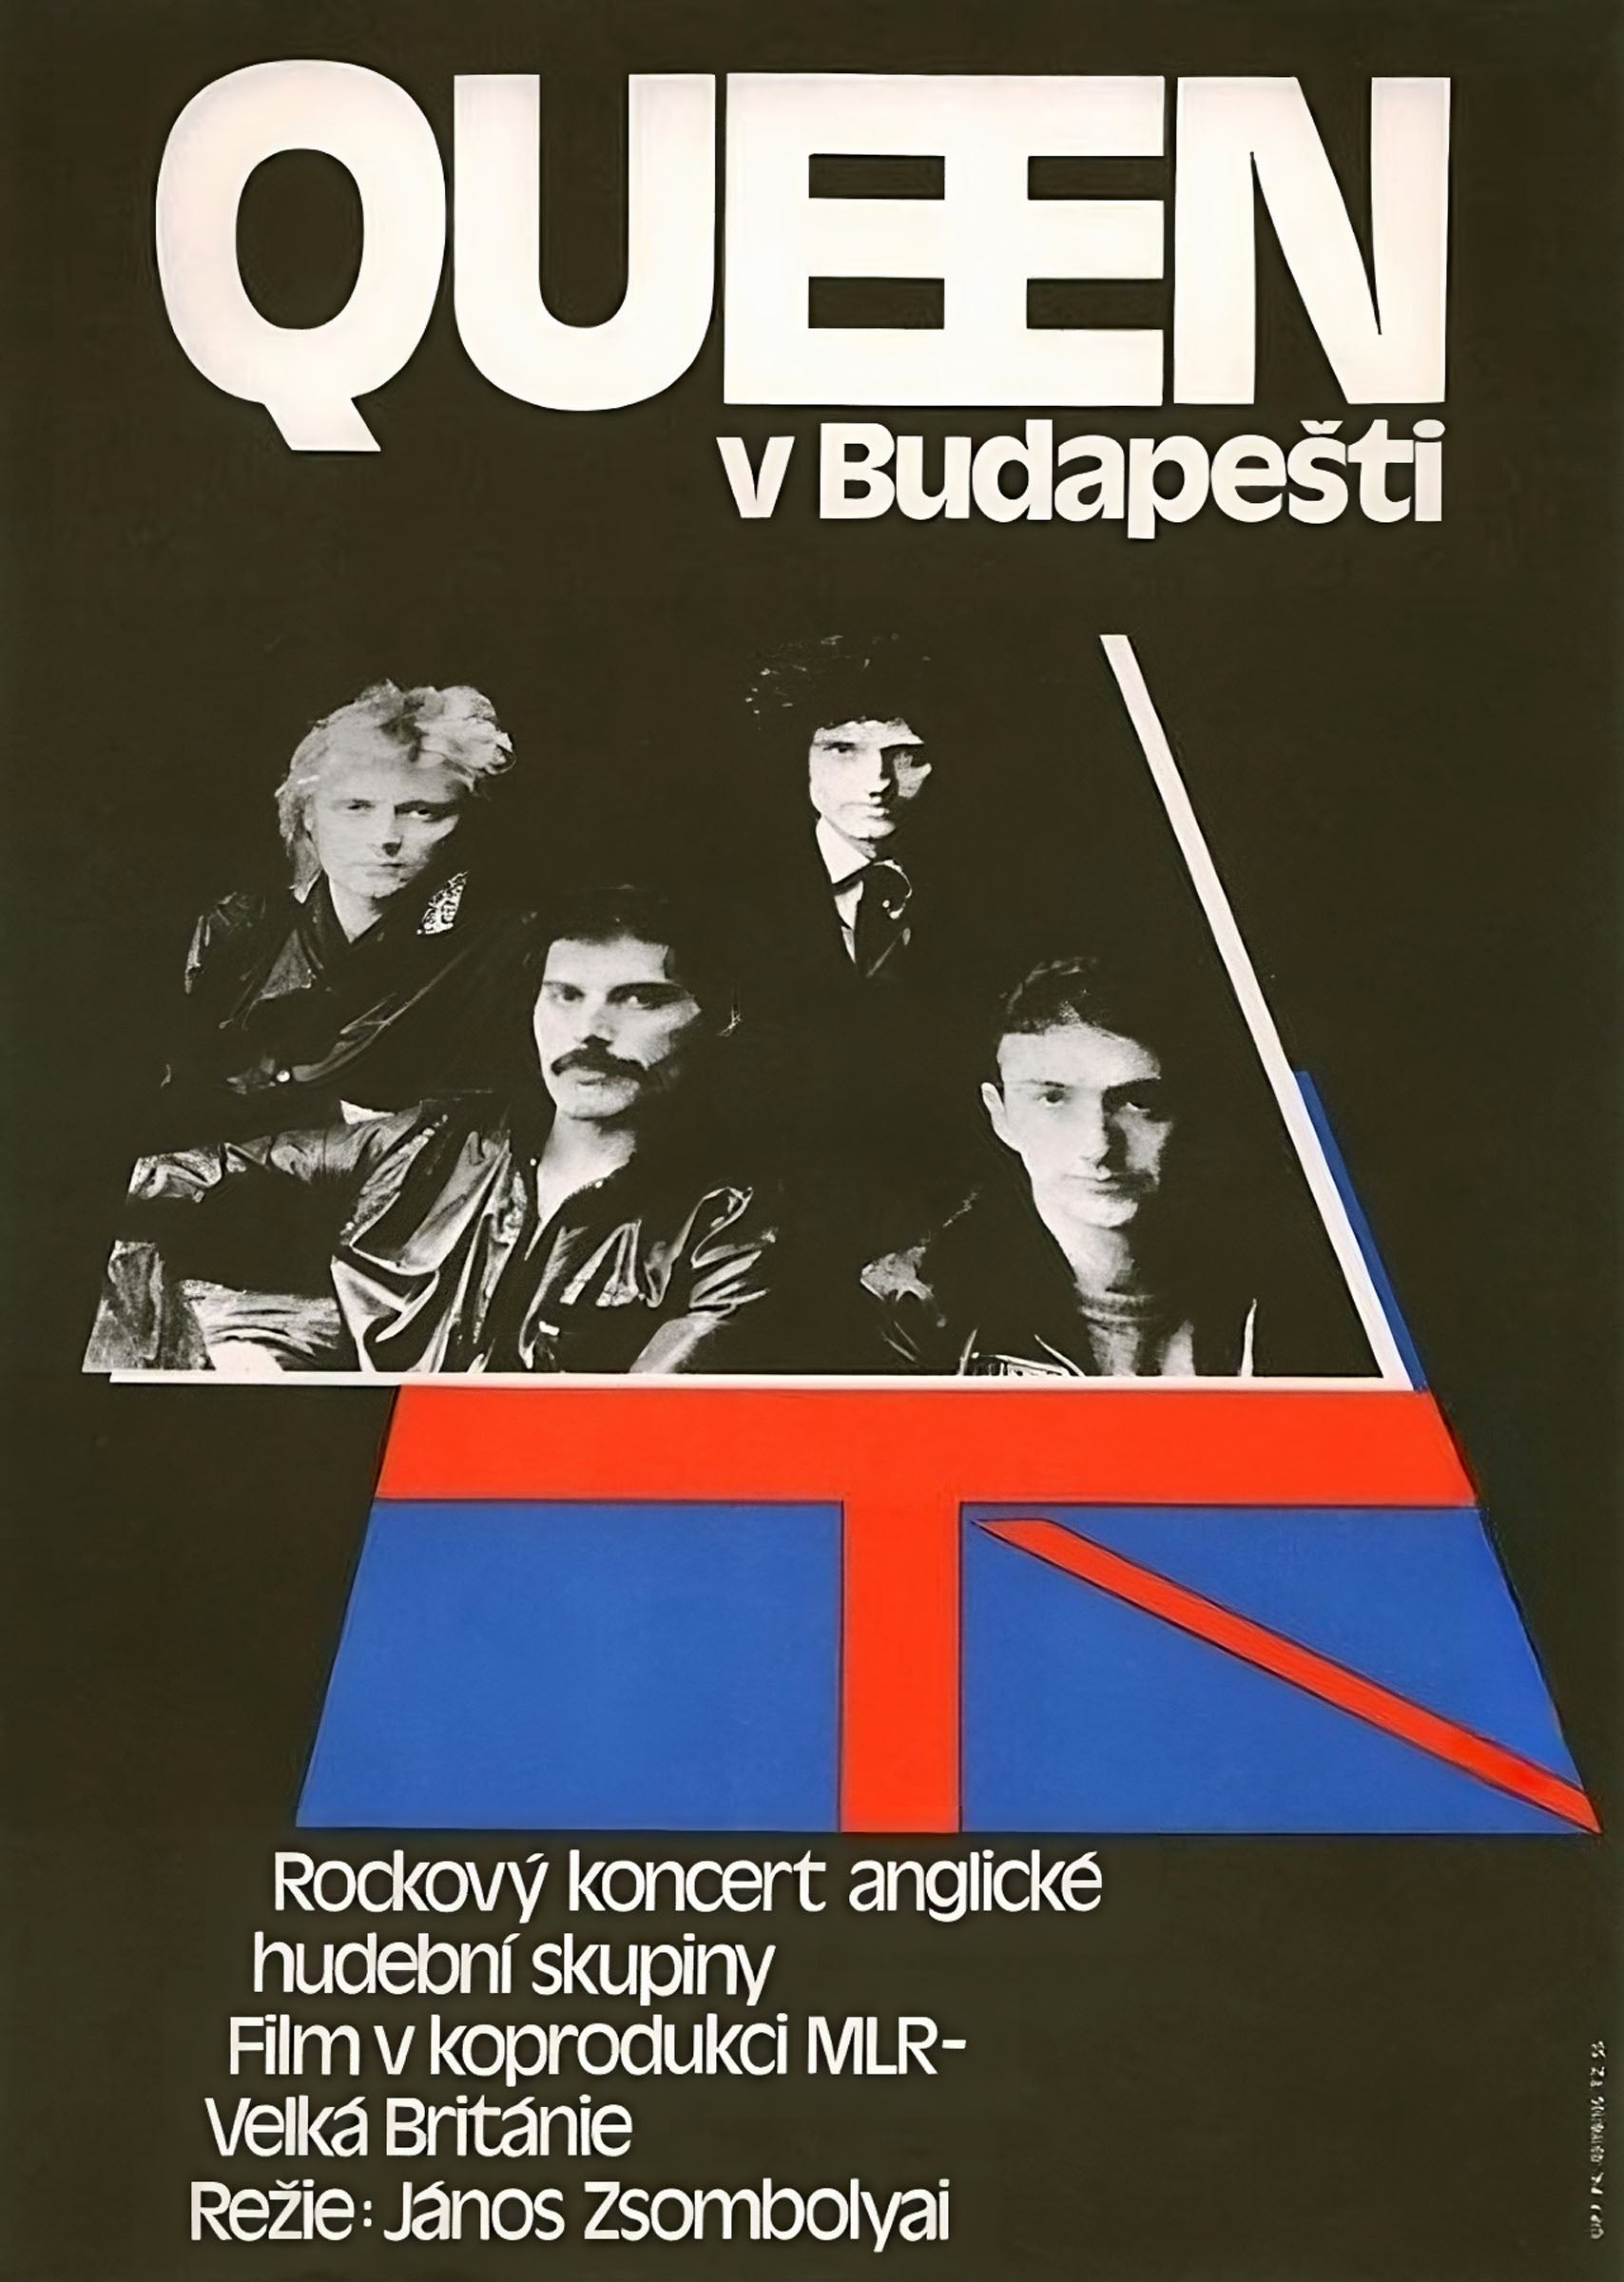 Freddie Mercury Budapest gig concert image - Czech film poster 